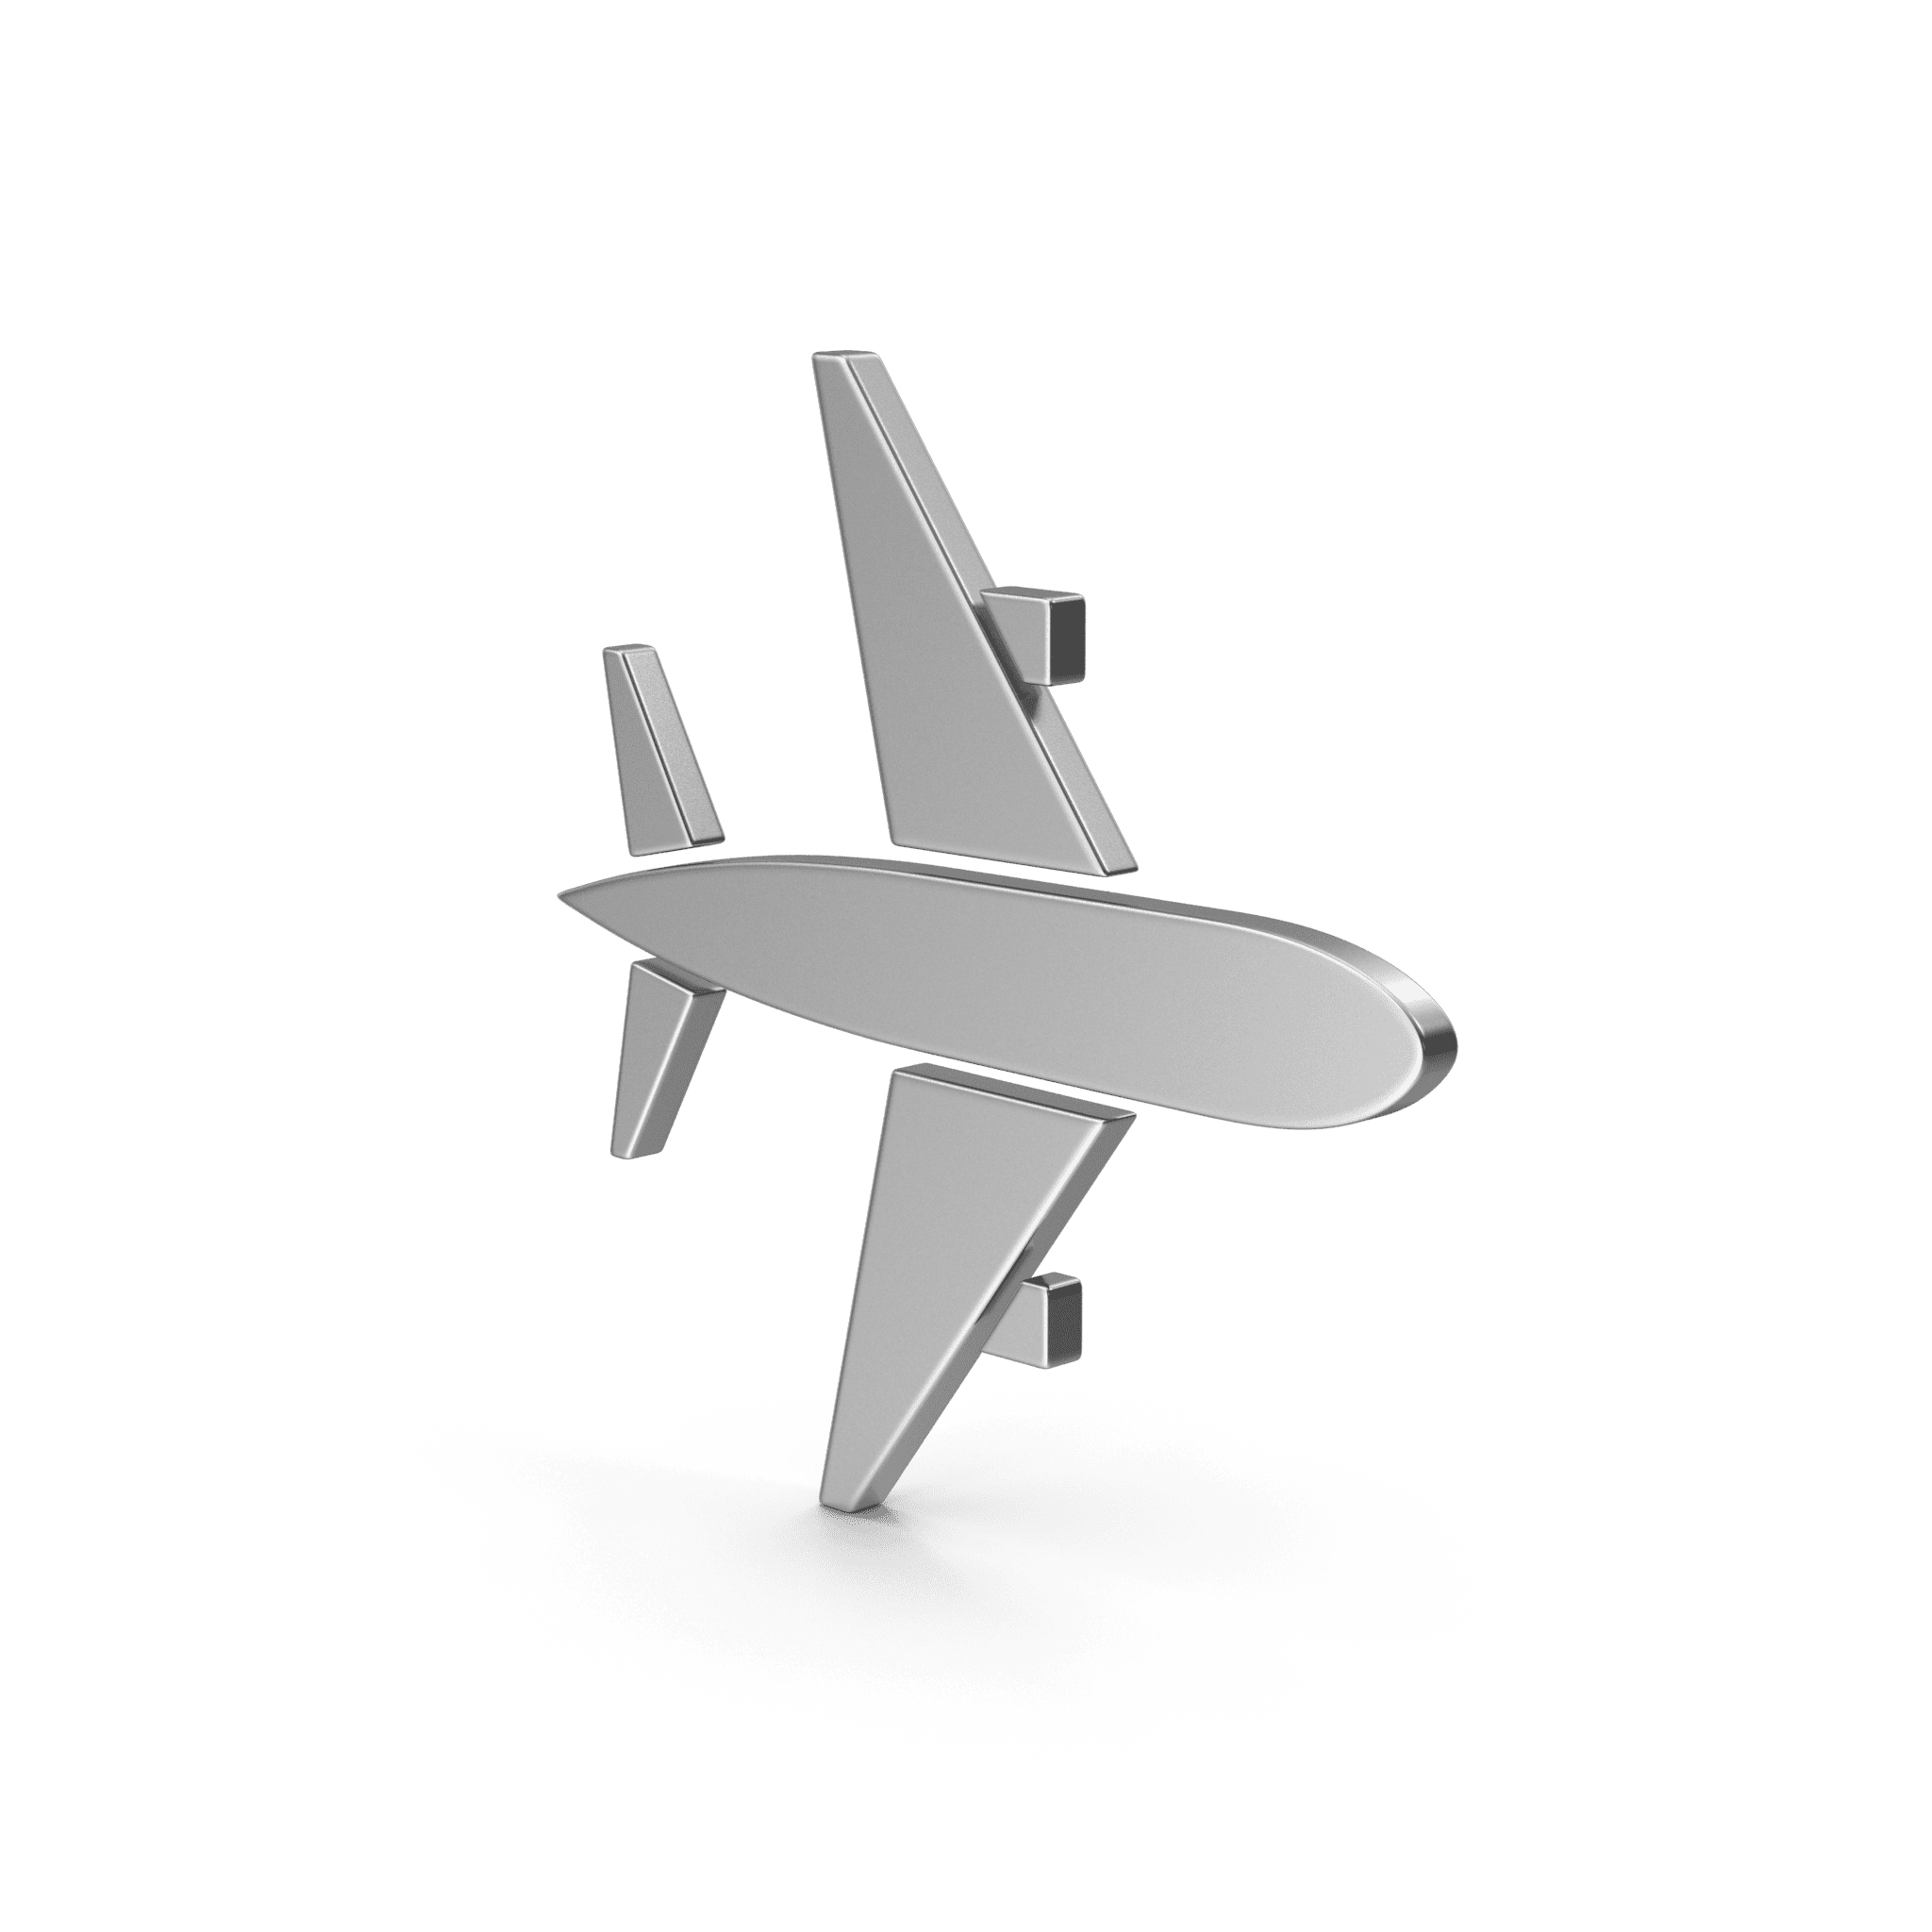 Posada Aviation